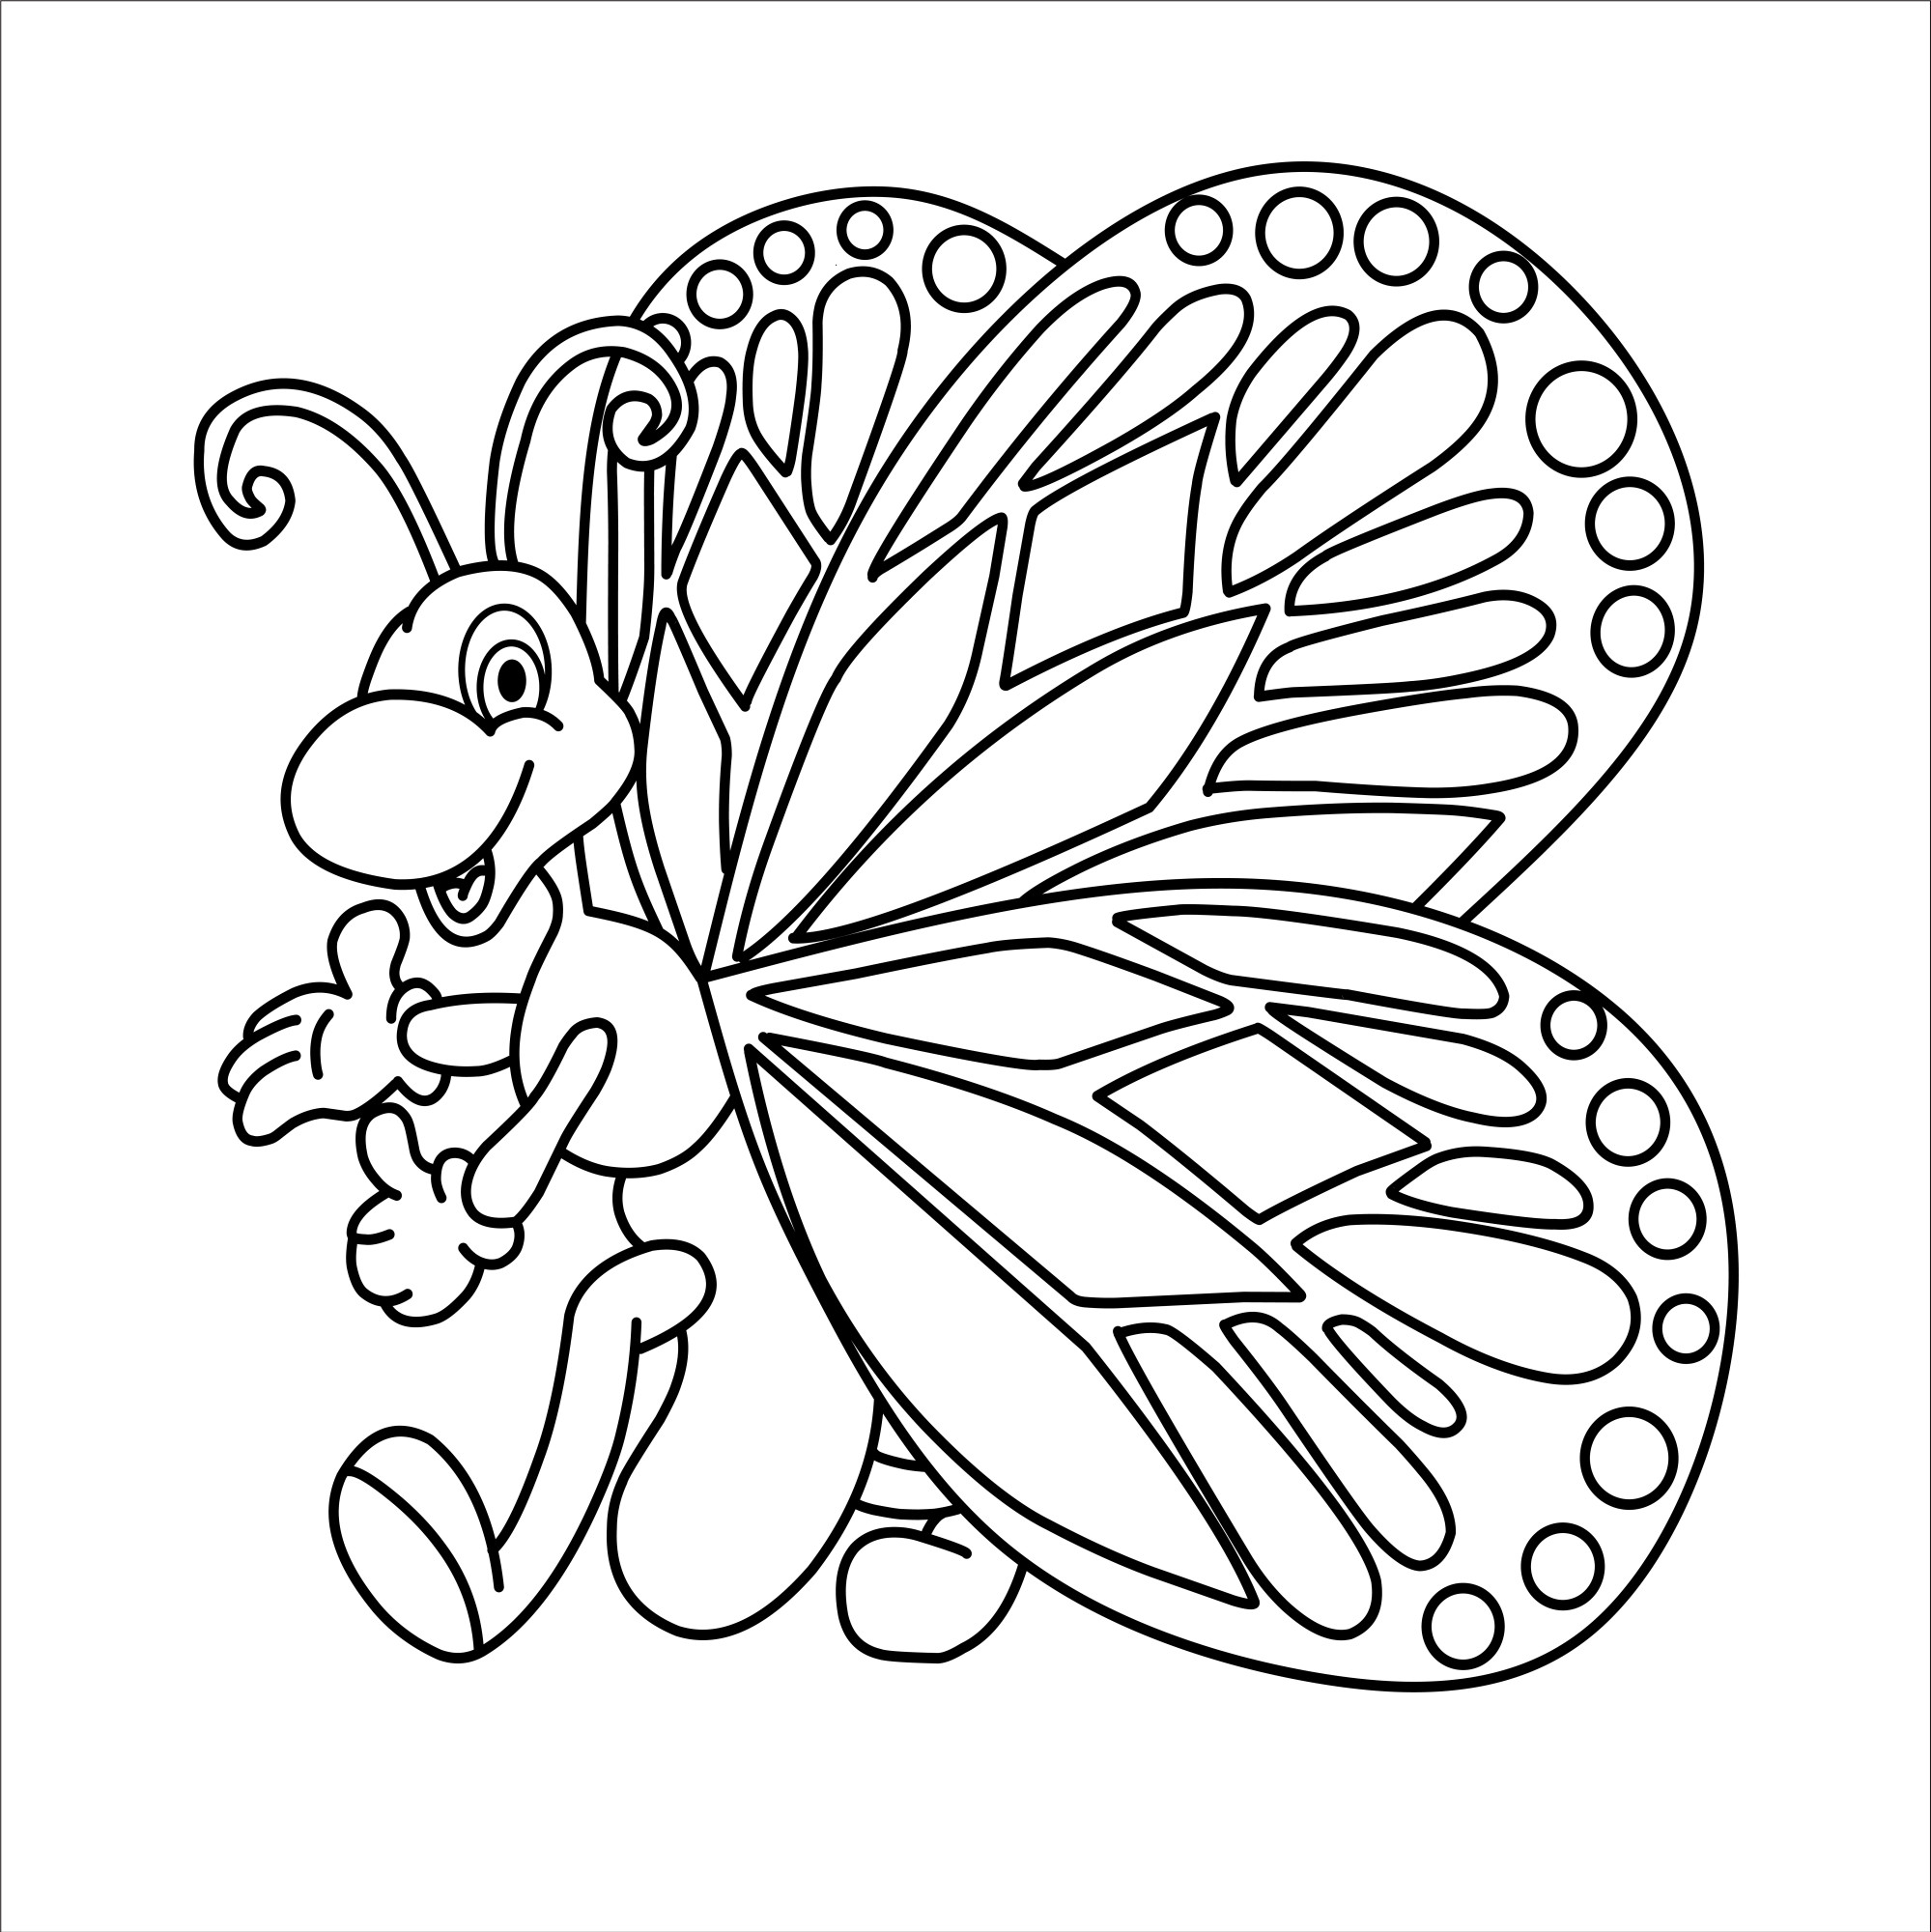 Раскраска для детей: симпатичная мультяшная бабочка шагает